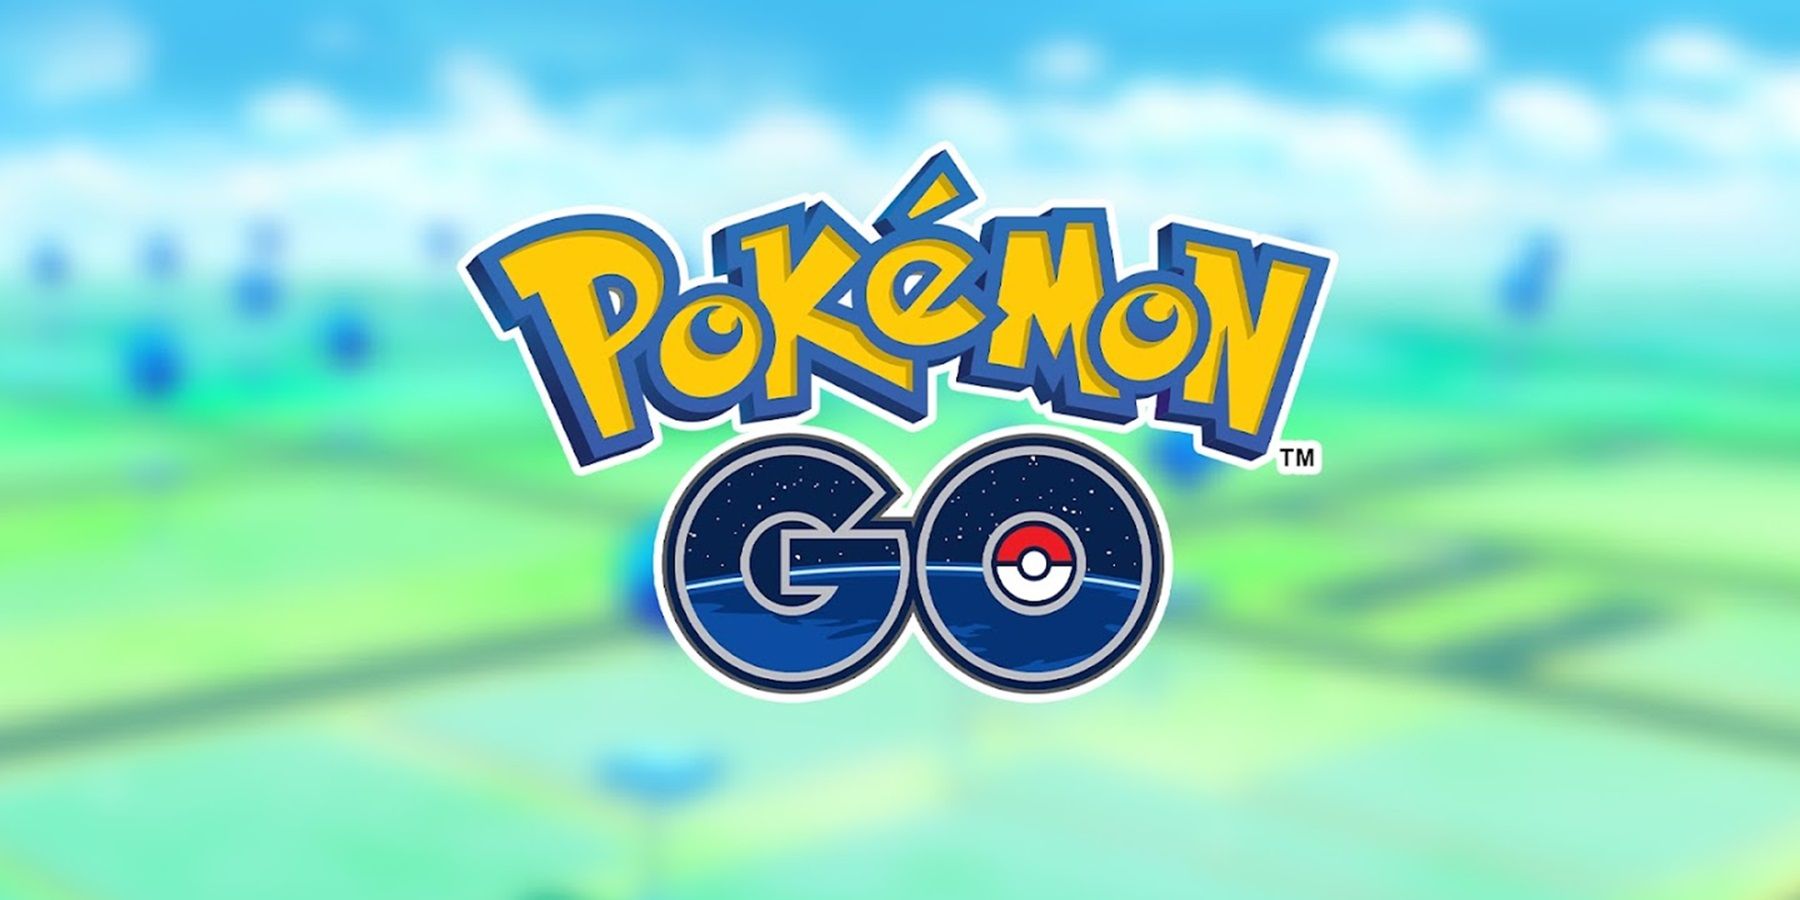 pokemon go logo with map